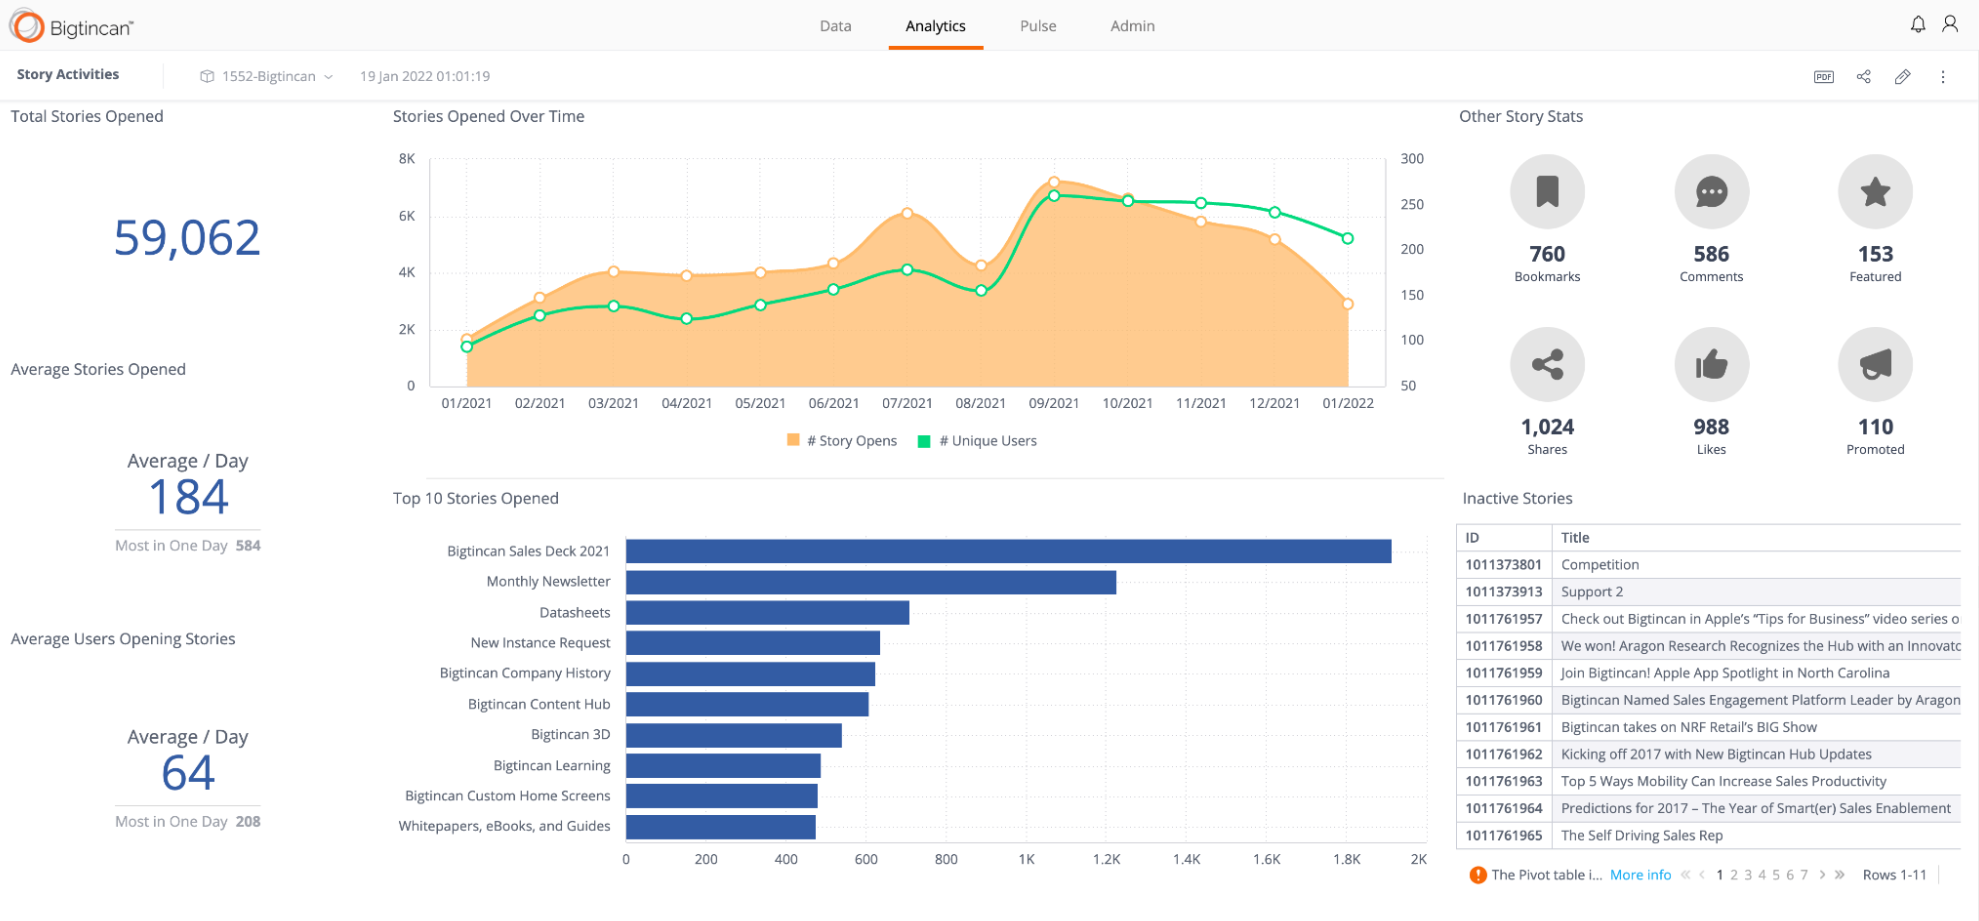 Bigtincan Analytics: Total Stories Opened, Average Stories Opened, Average Users Opening Stories, etc.